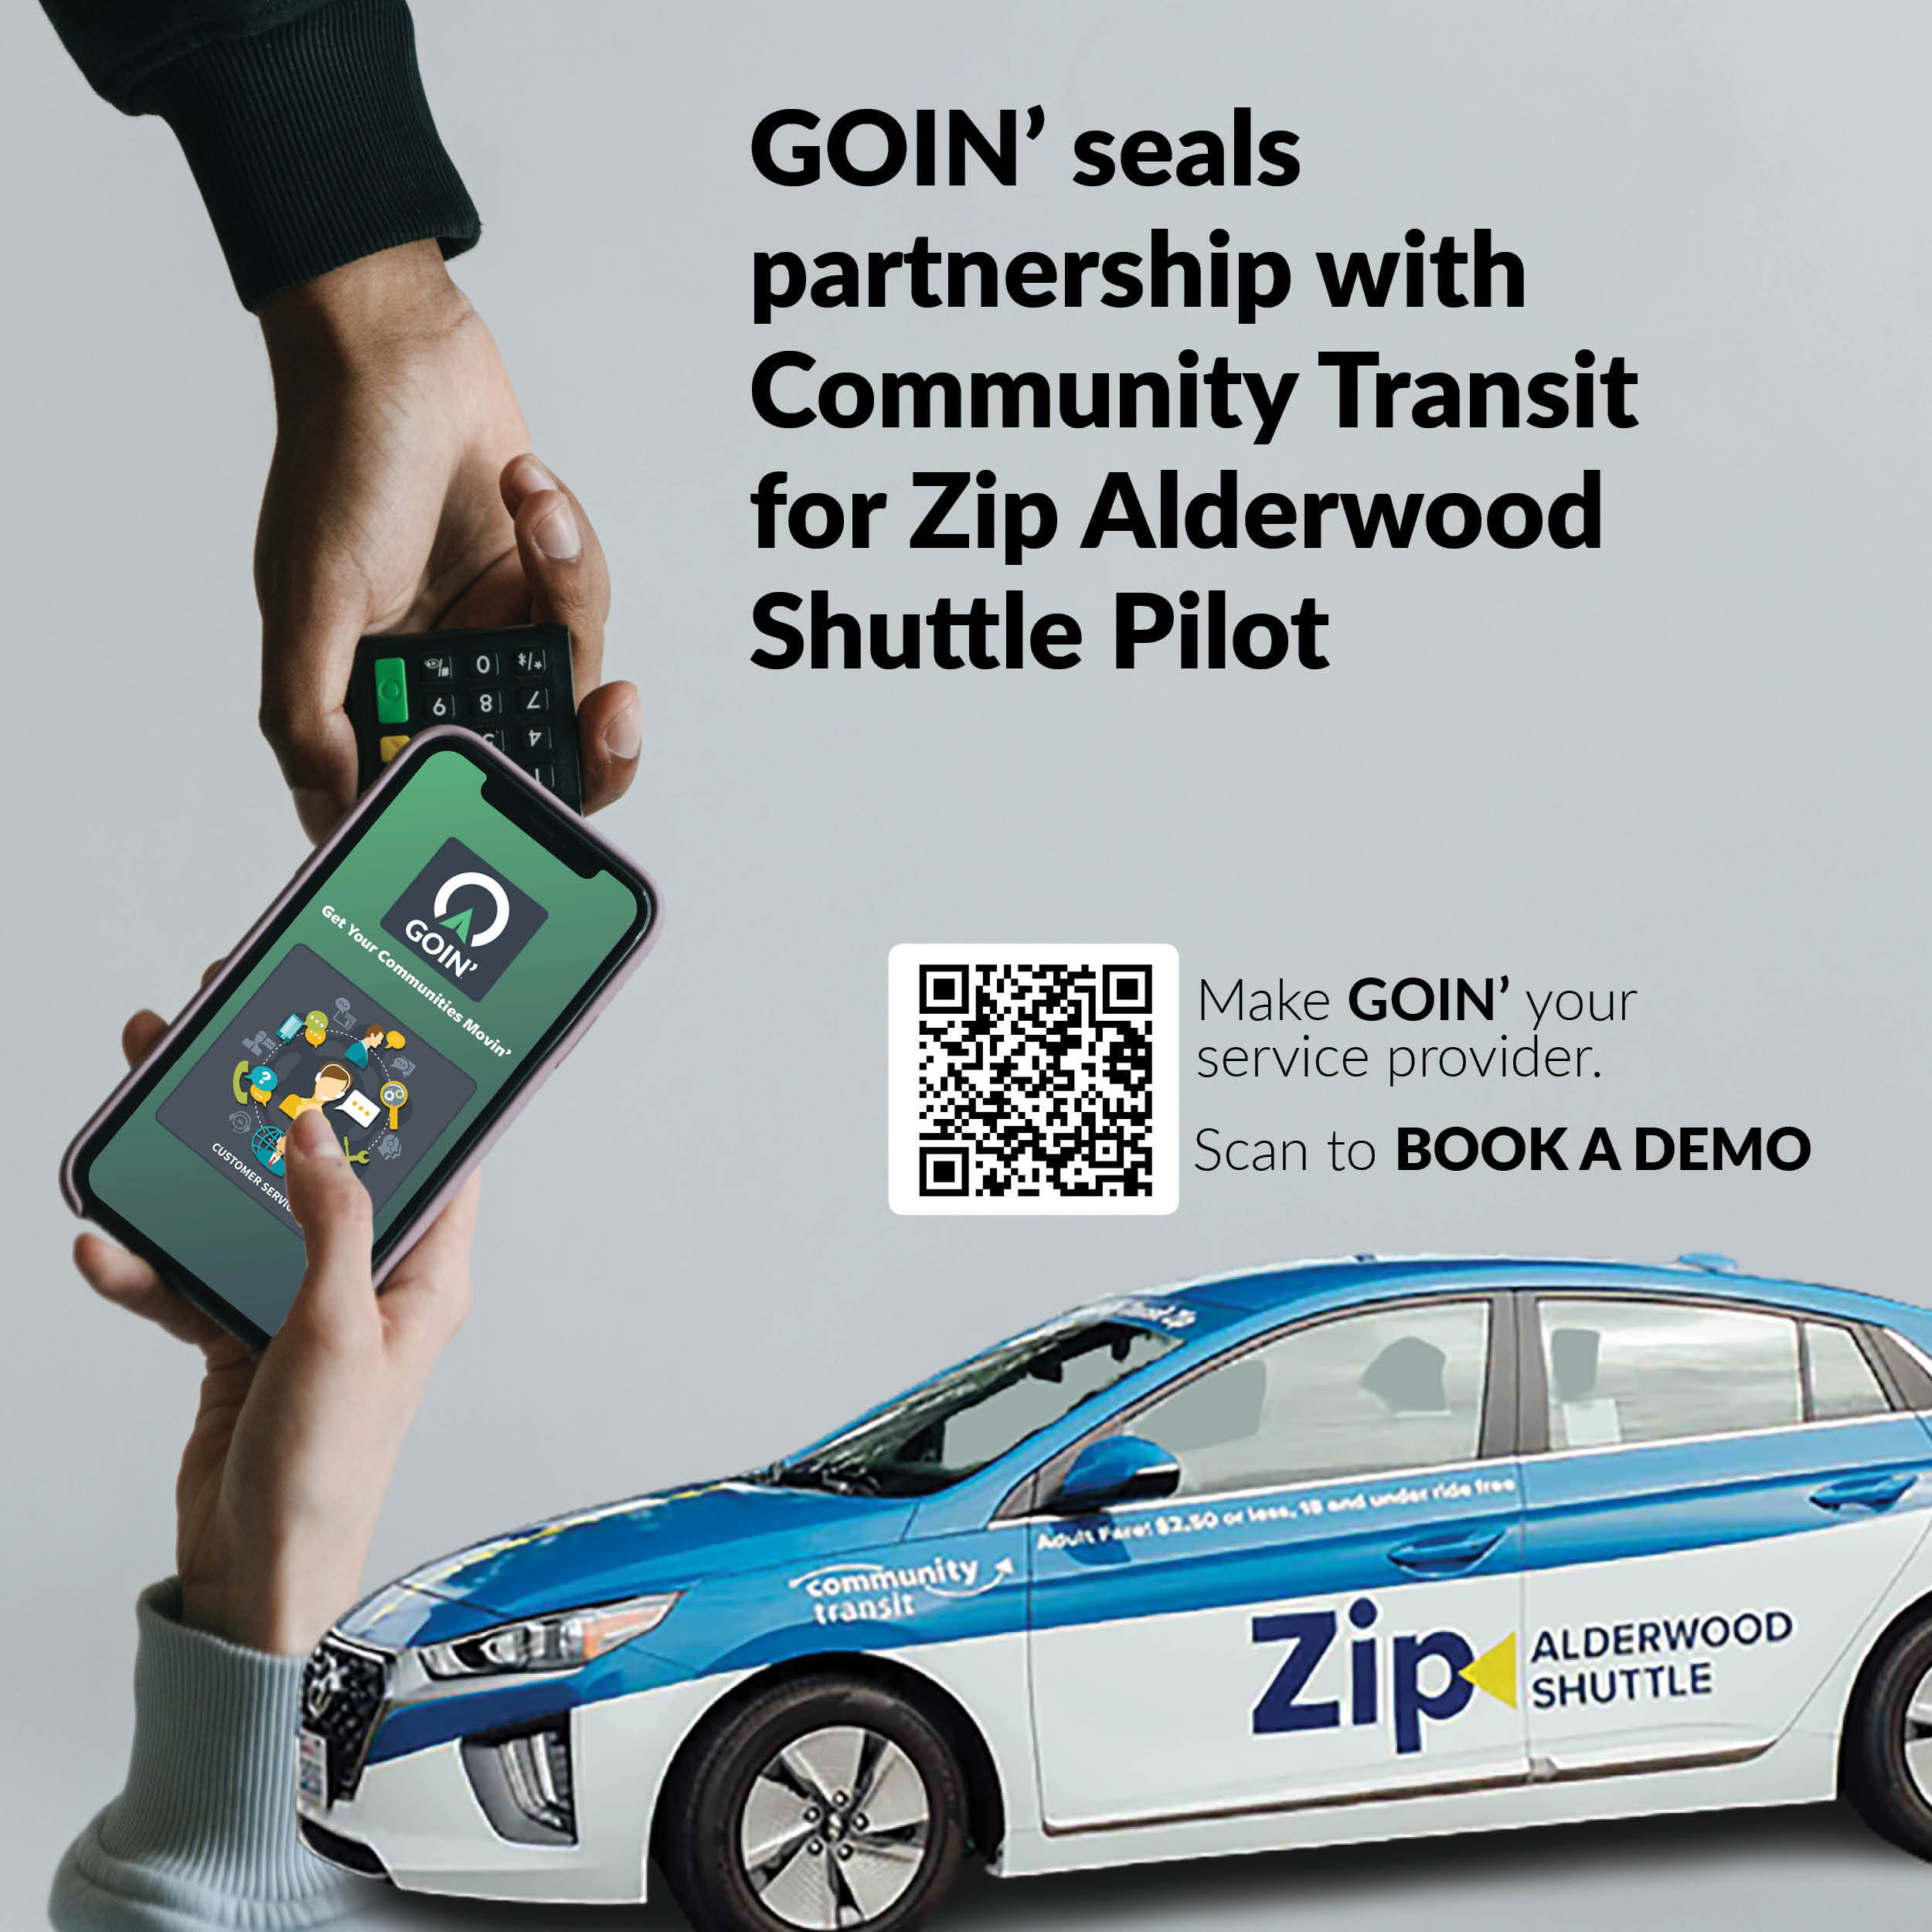 Community Transit Partners with GOIN’ for the Zip Alderwood Shuttle Pilot